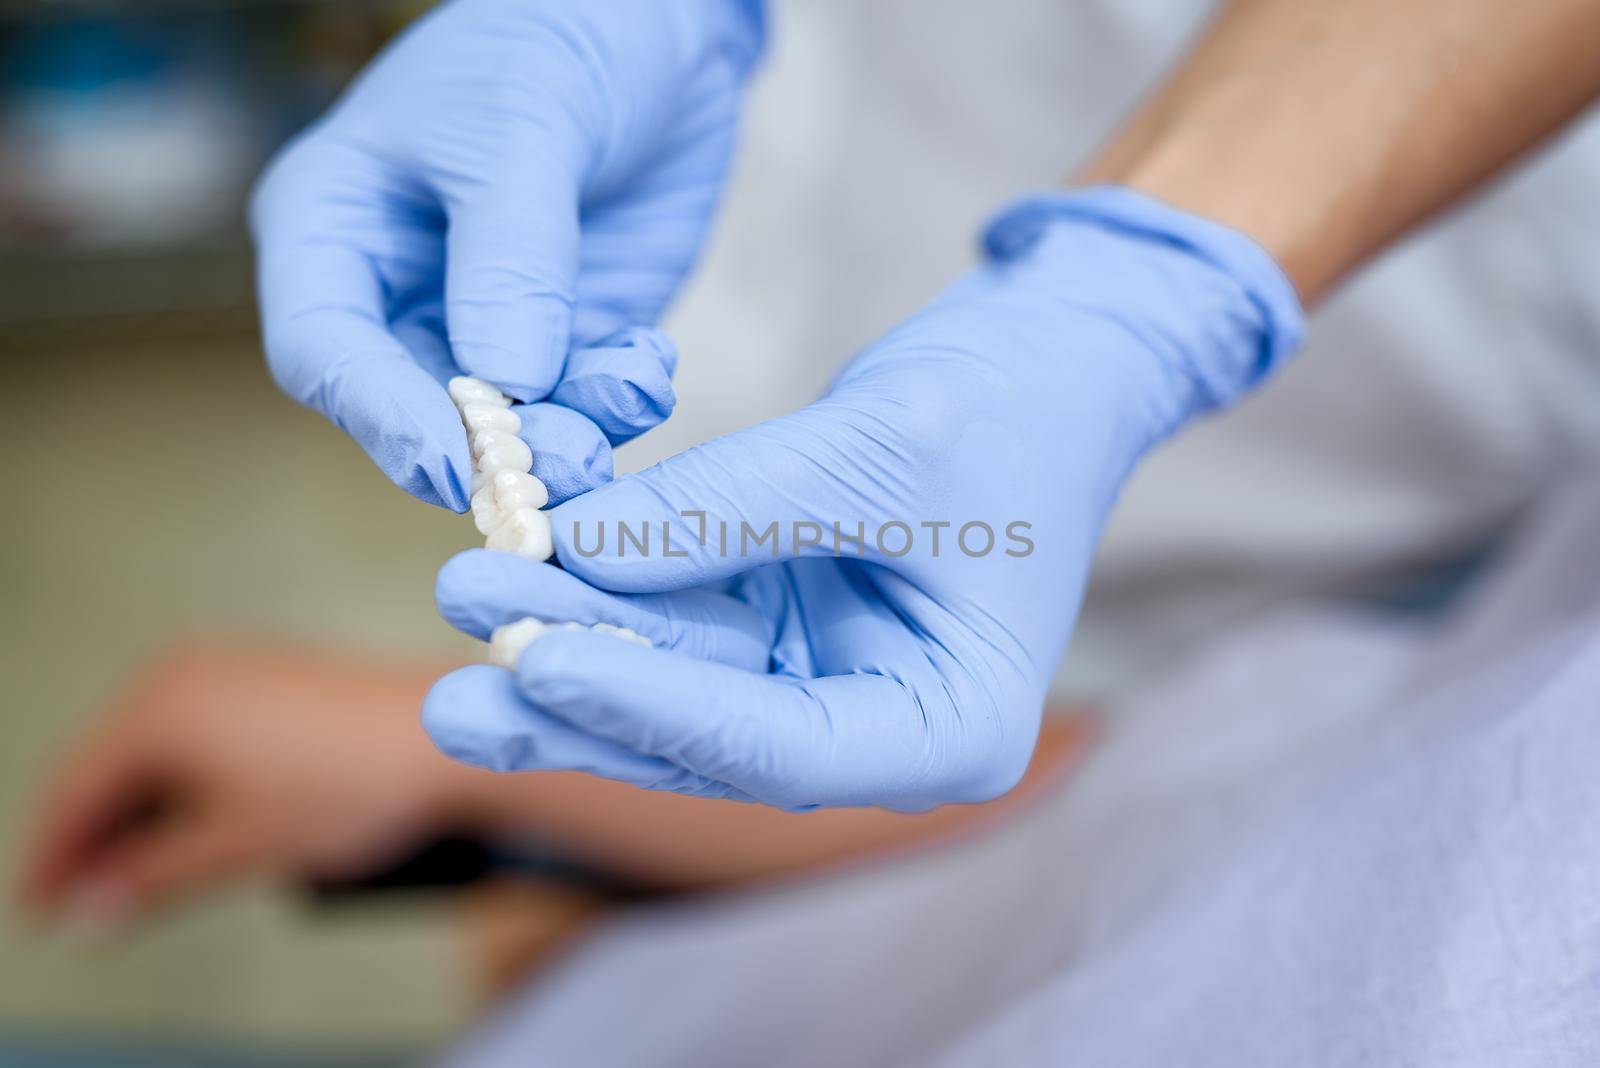 Dentist showing porcelain crowns to the patient. Close-up. Unrecognizable people. Selective focus. Focus on ceramics implant.